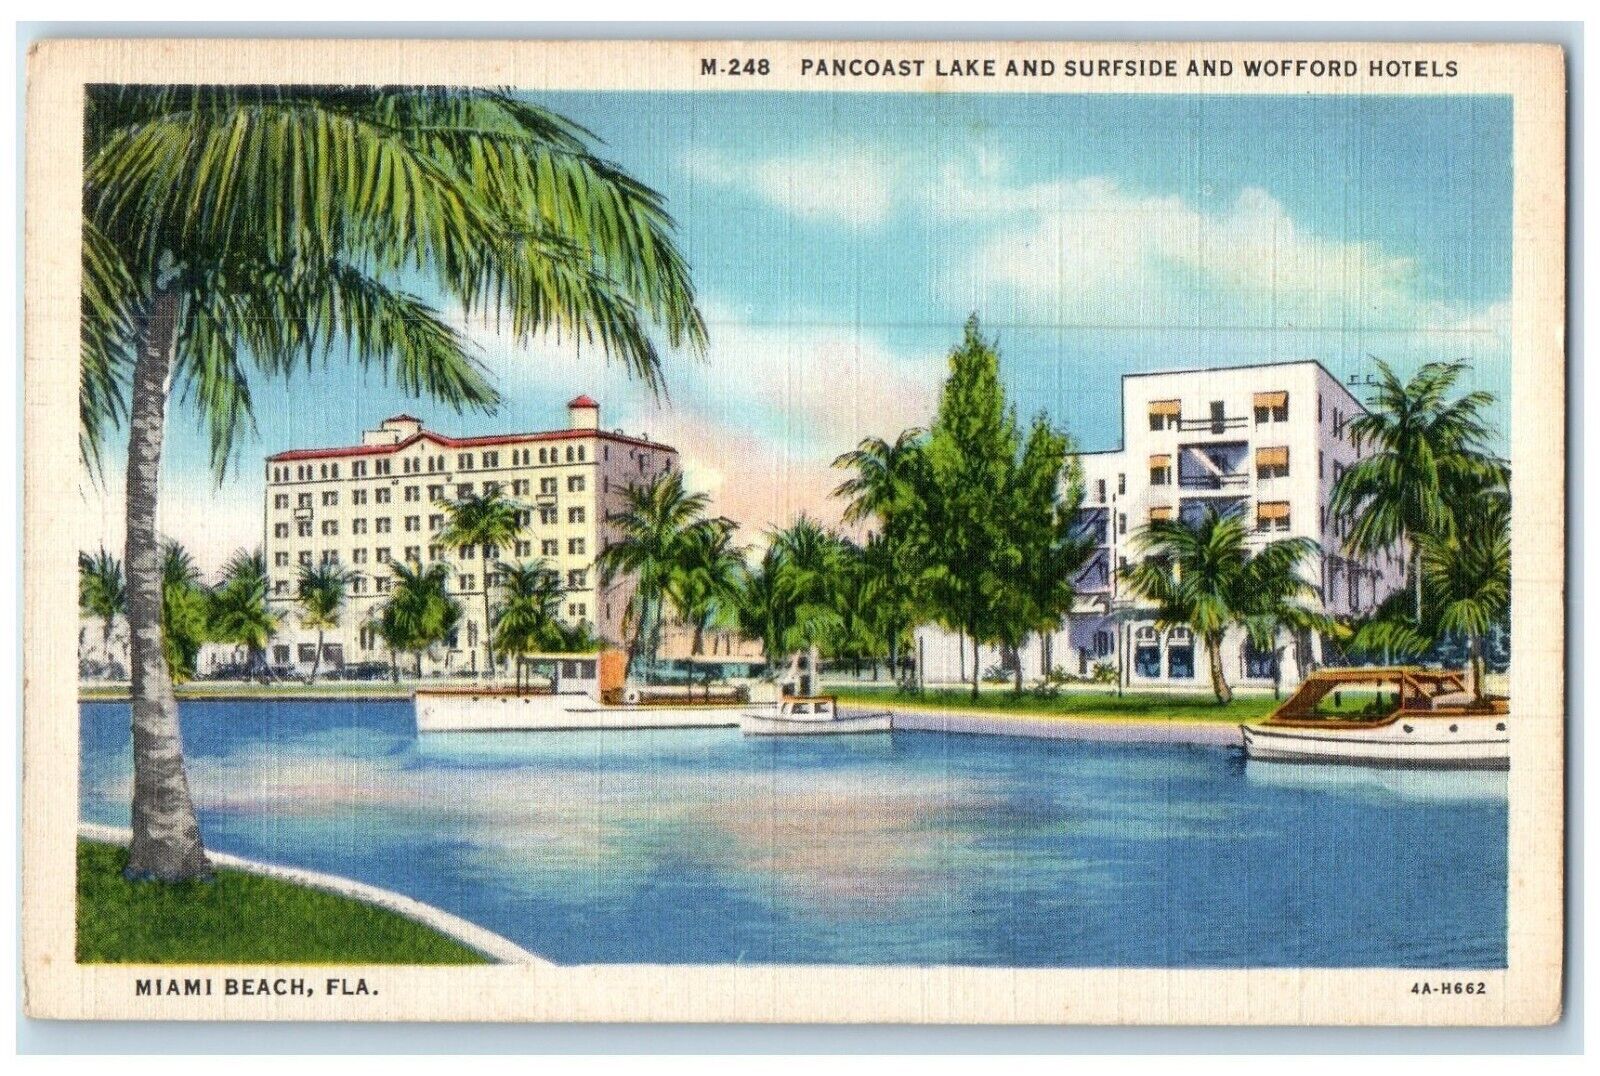 c1940 Pancoast Lake Surfside Wofford Hotels Miami Beach Florida Vintage Postcard